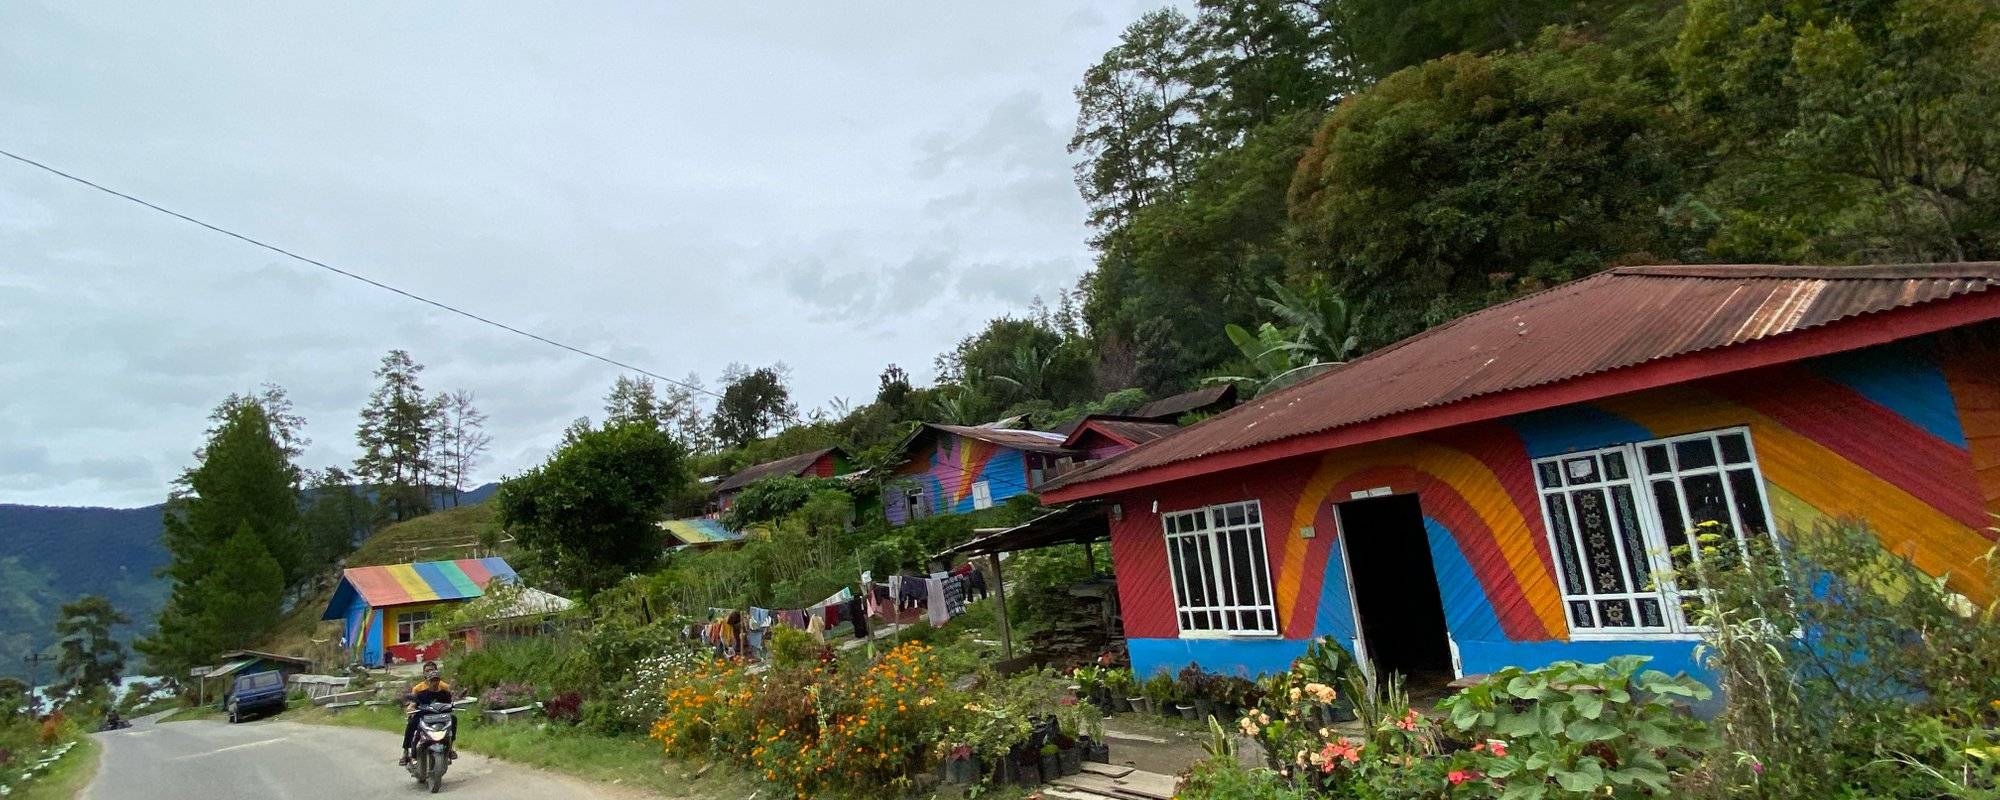 Local Wisdom of Pelangi Village in the Gayo Highlands